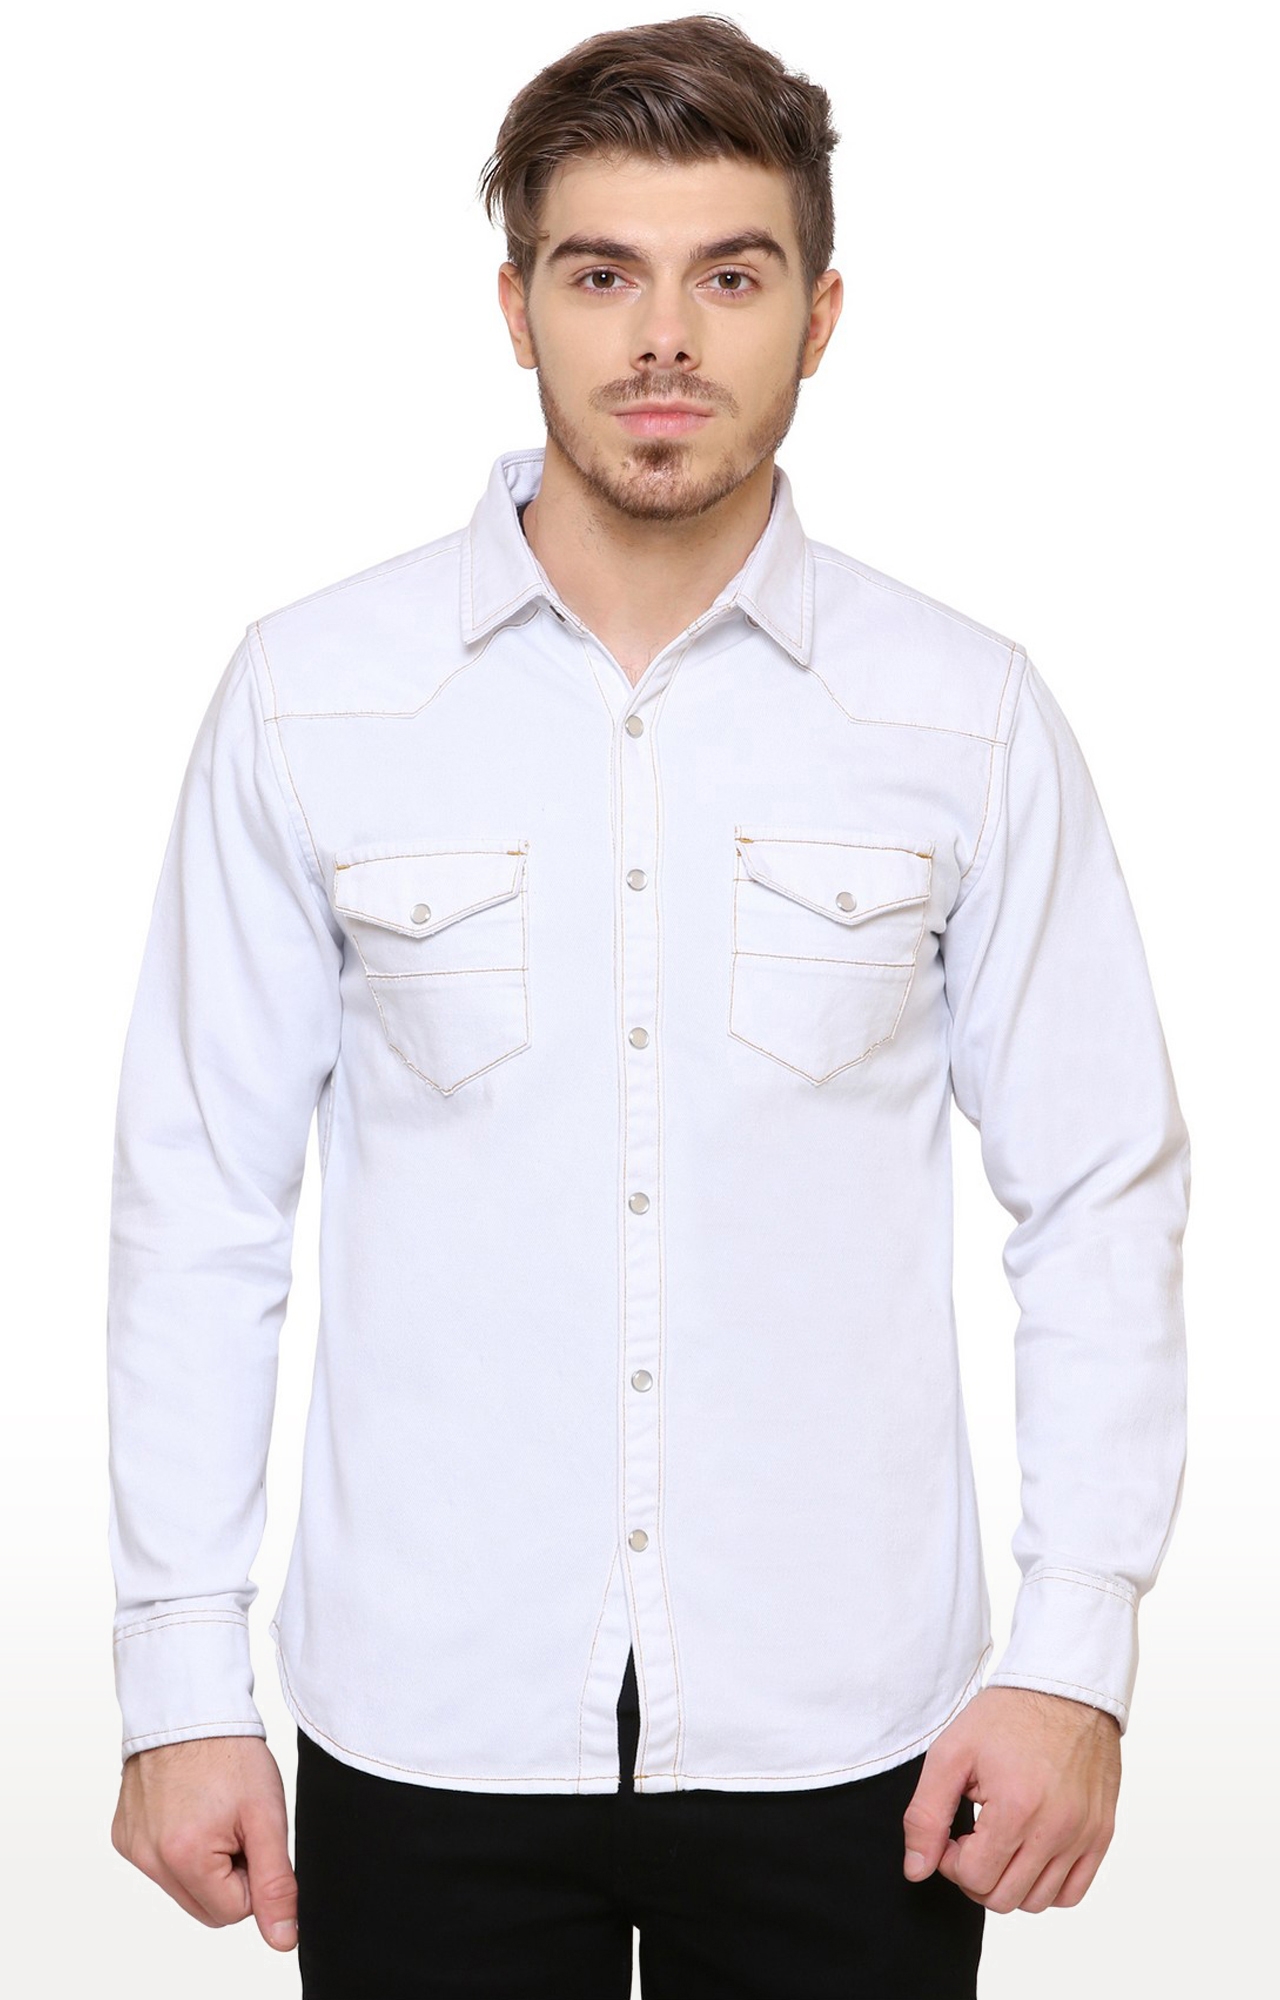 Southbay Men's White Casual Denim Shirt